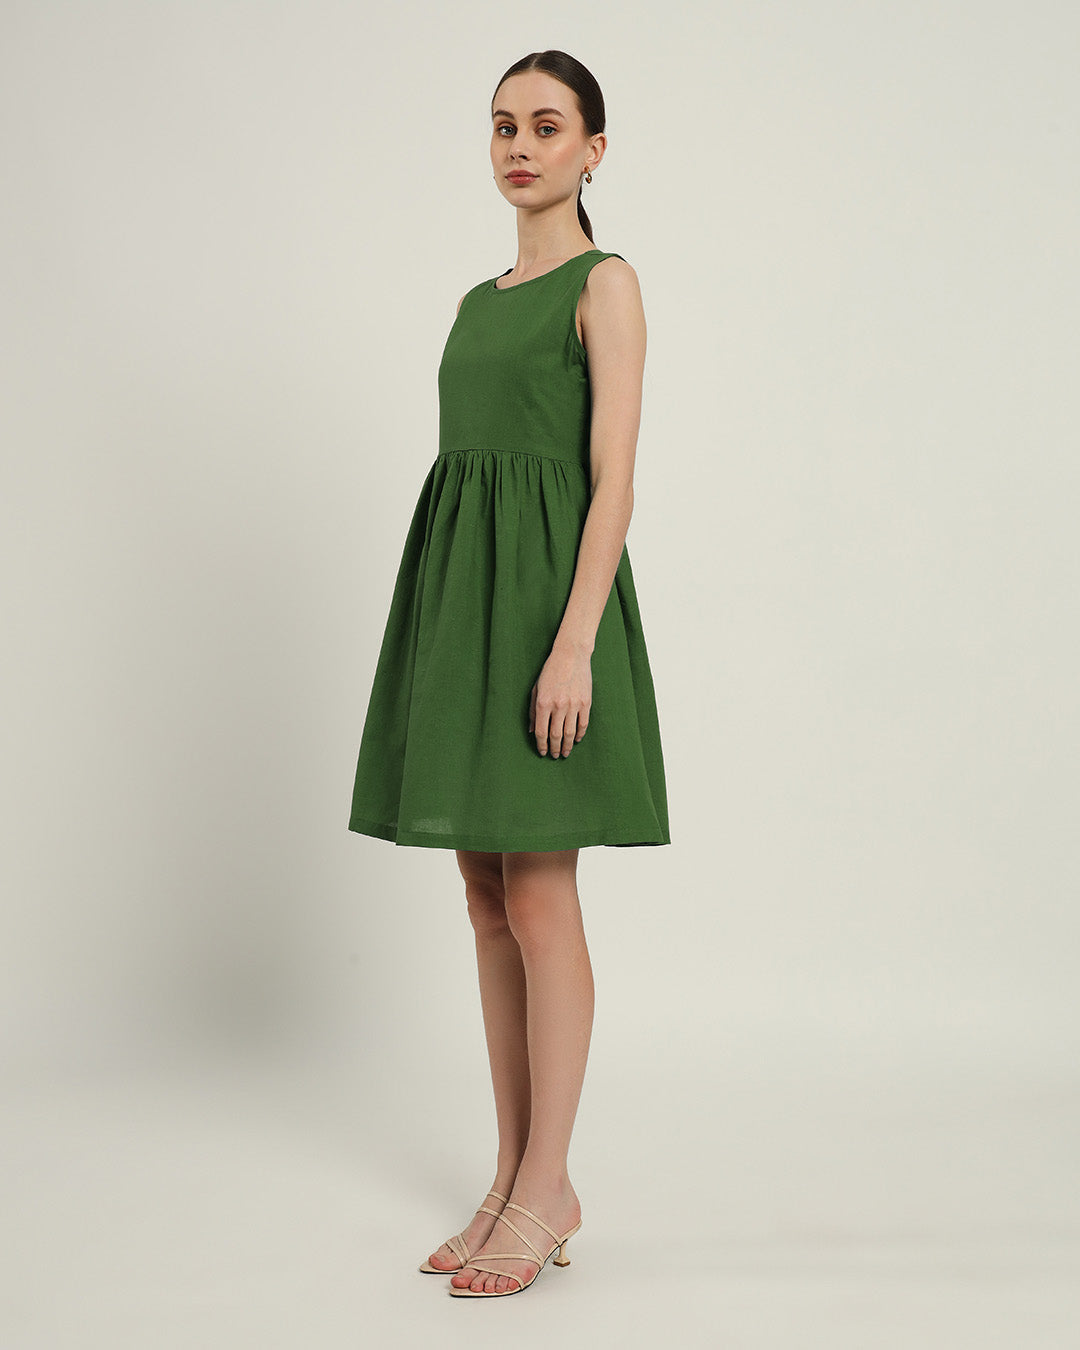 The Chania Emerald Dress